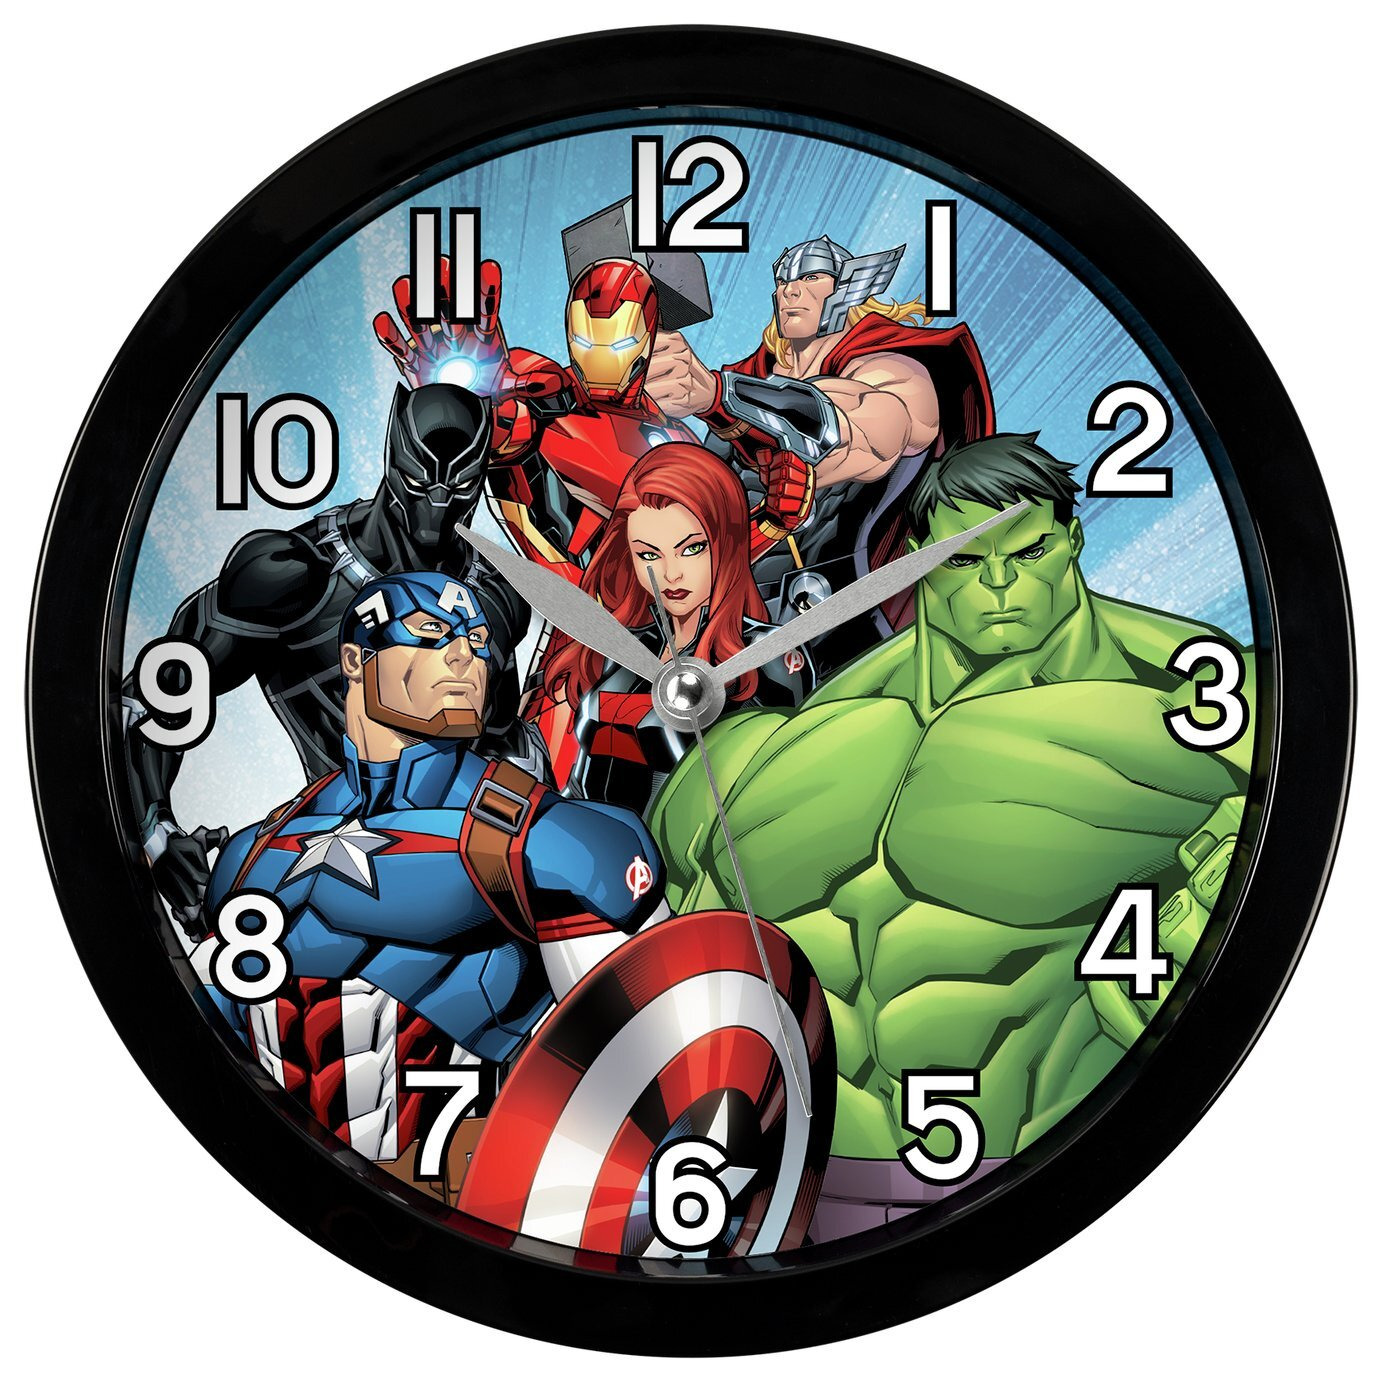 Disney Marvel Avengers Kids Wall Clock - Black - image 1